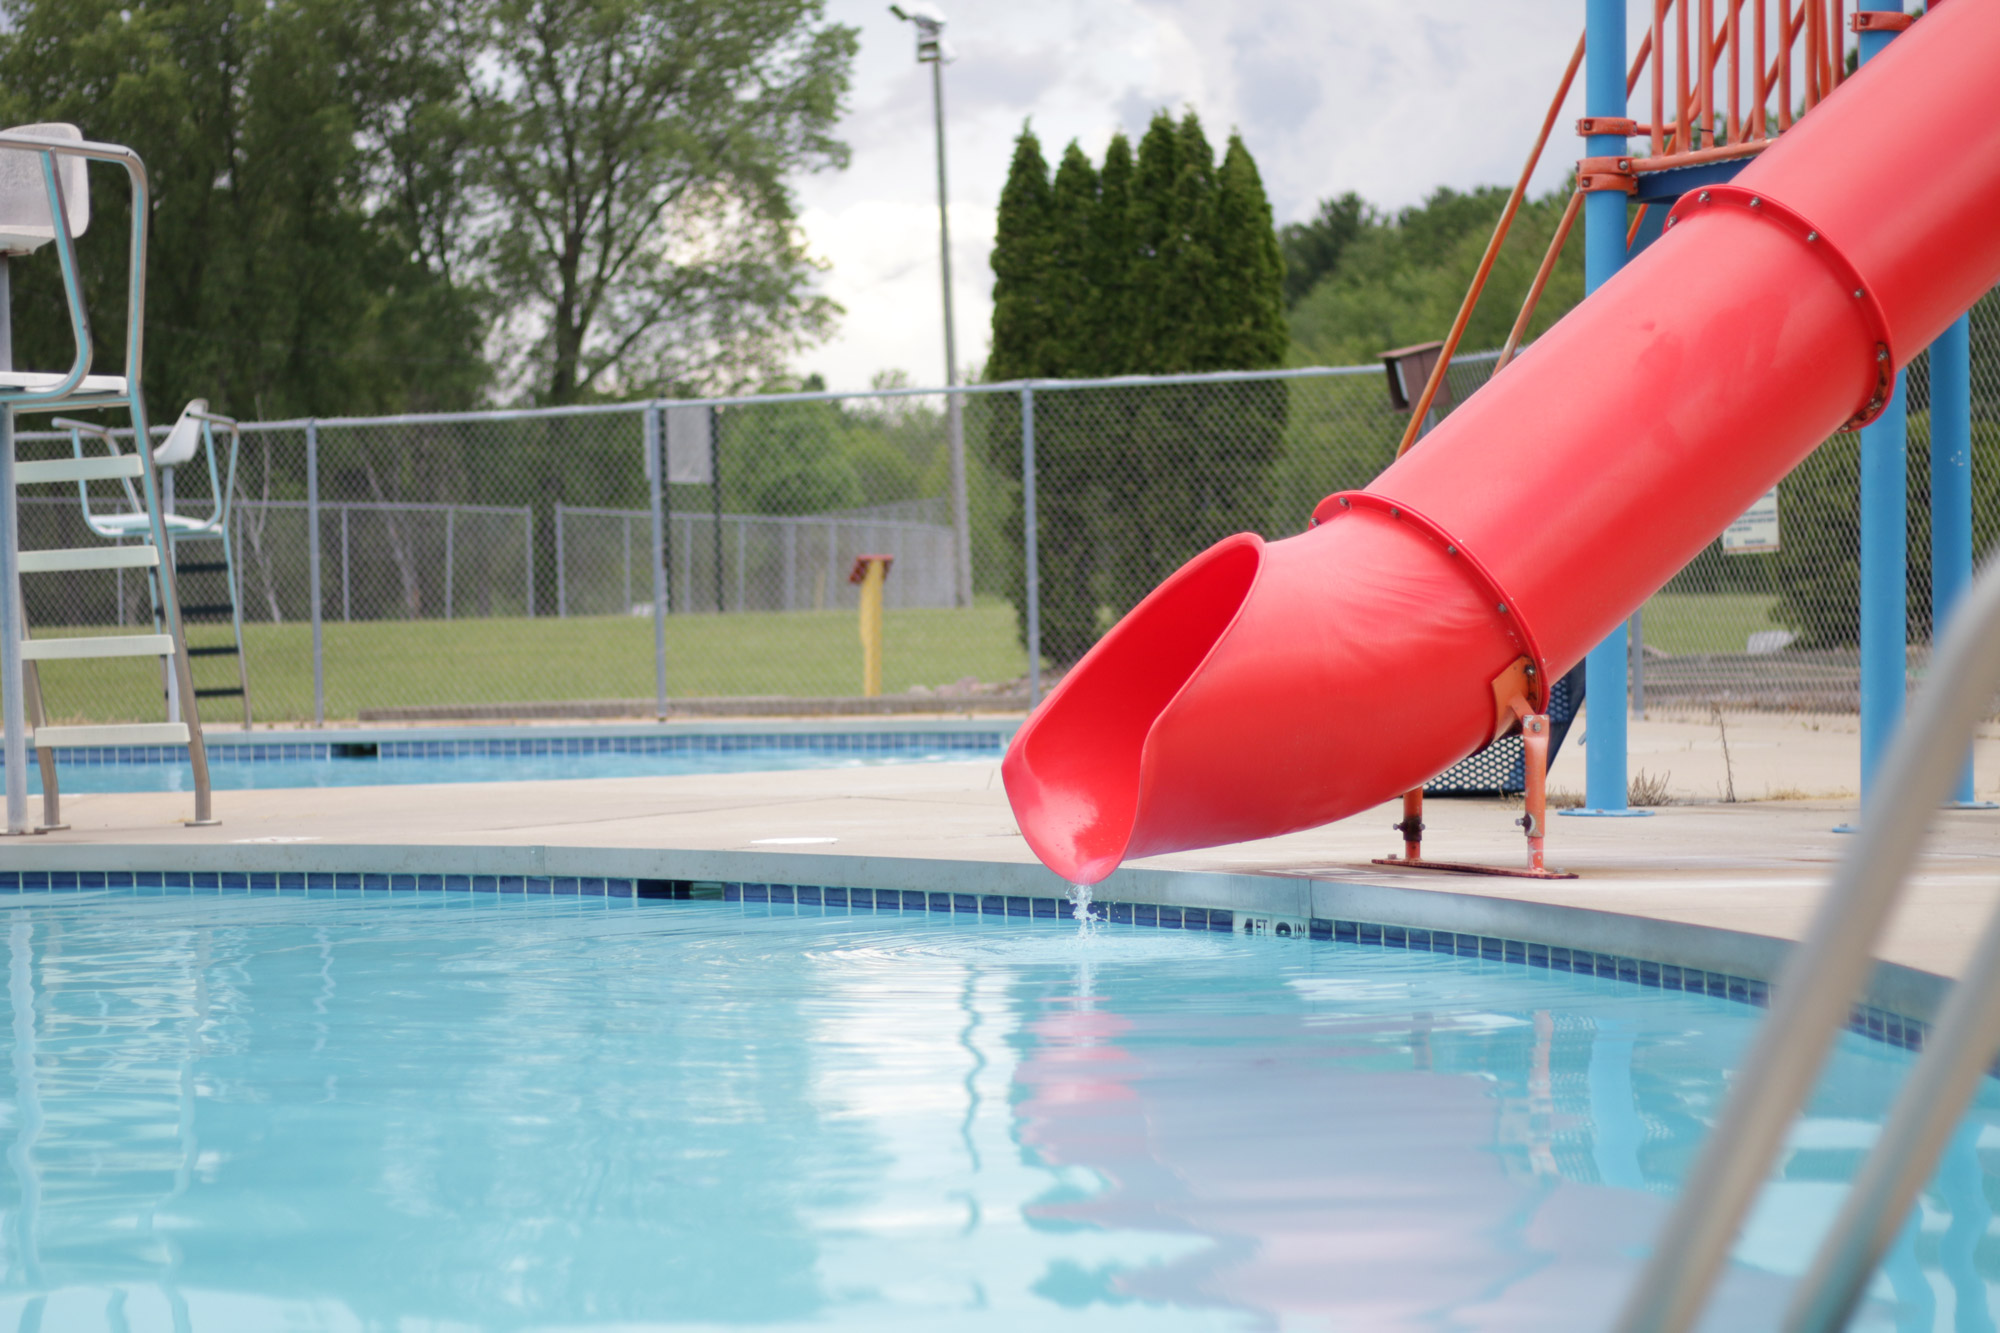 Slide in Pool Area